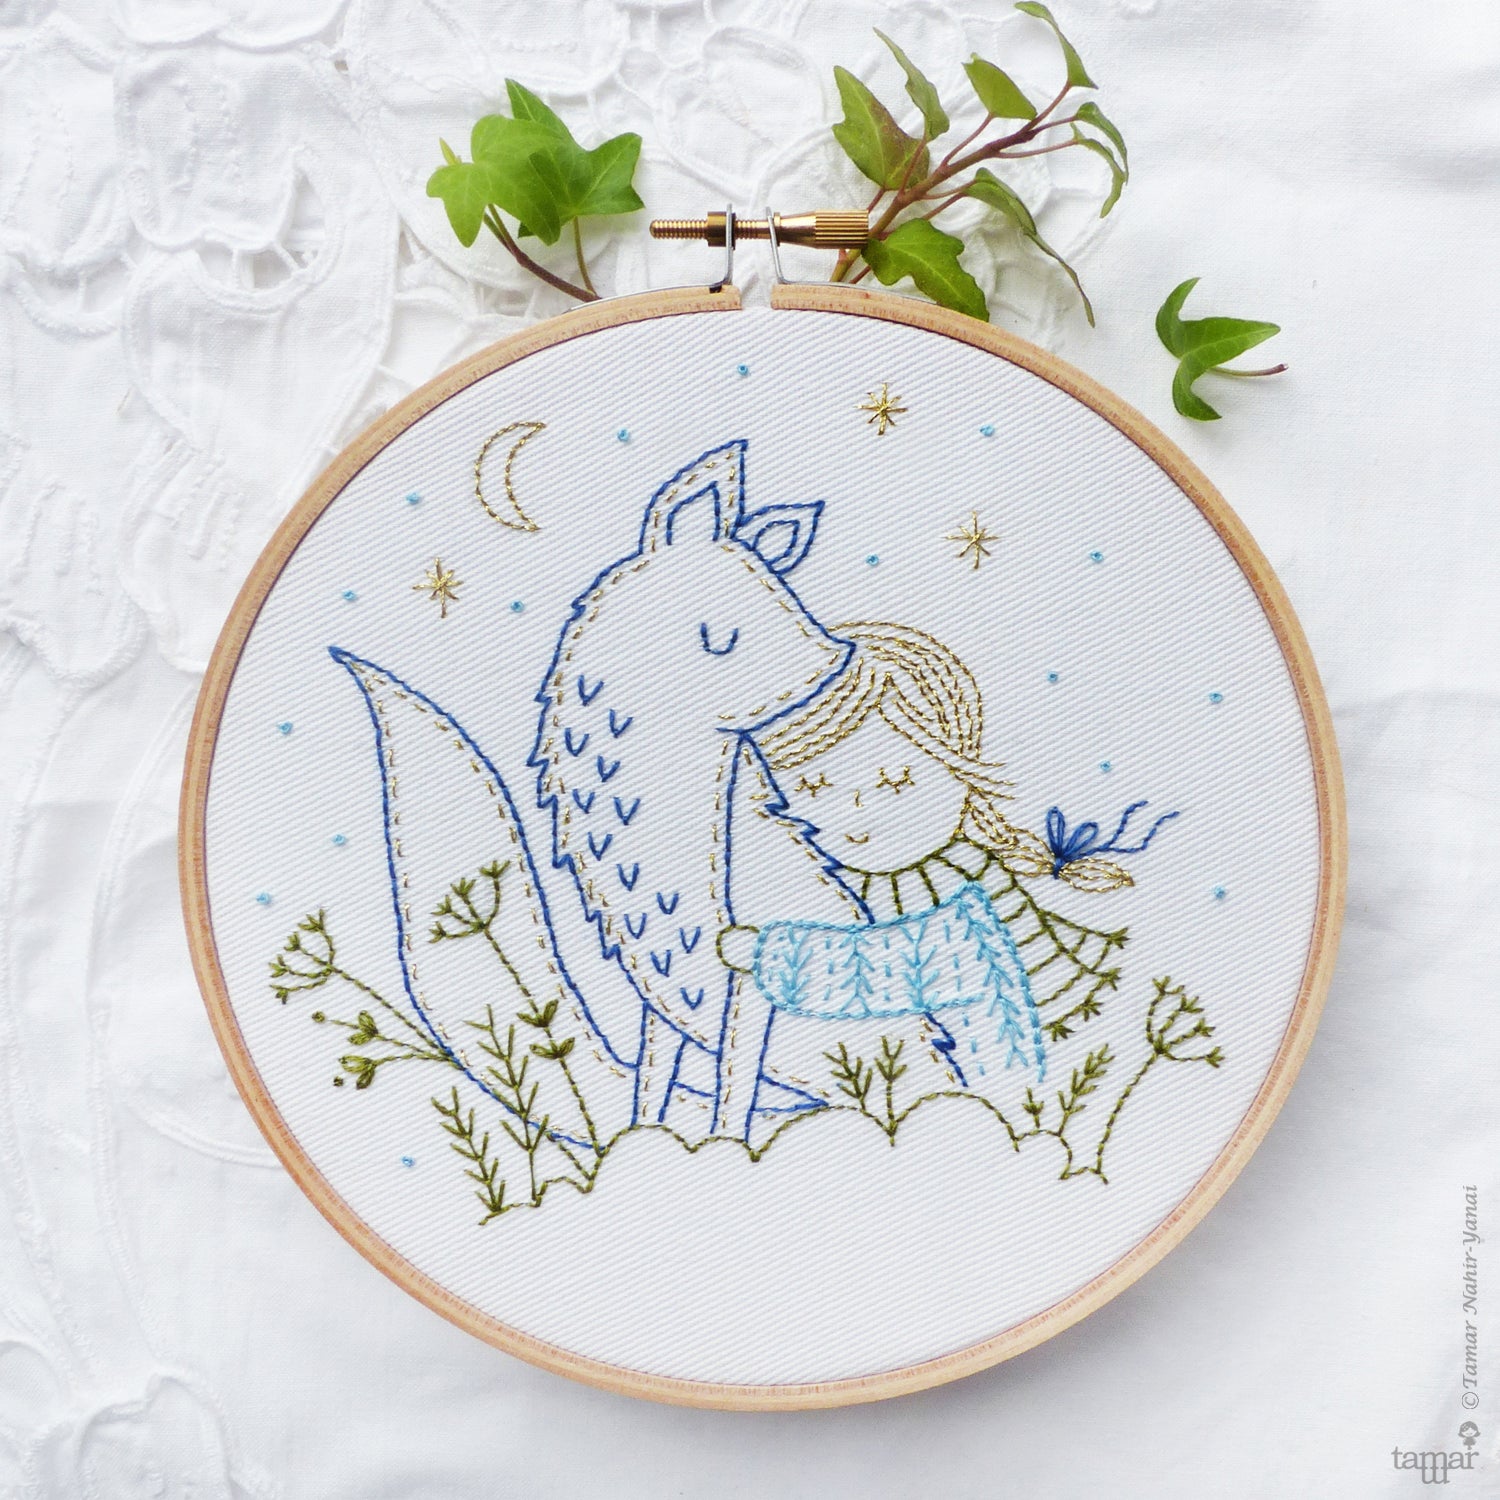 Unicorn 4-inch embroidery kit